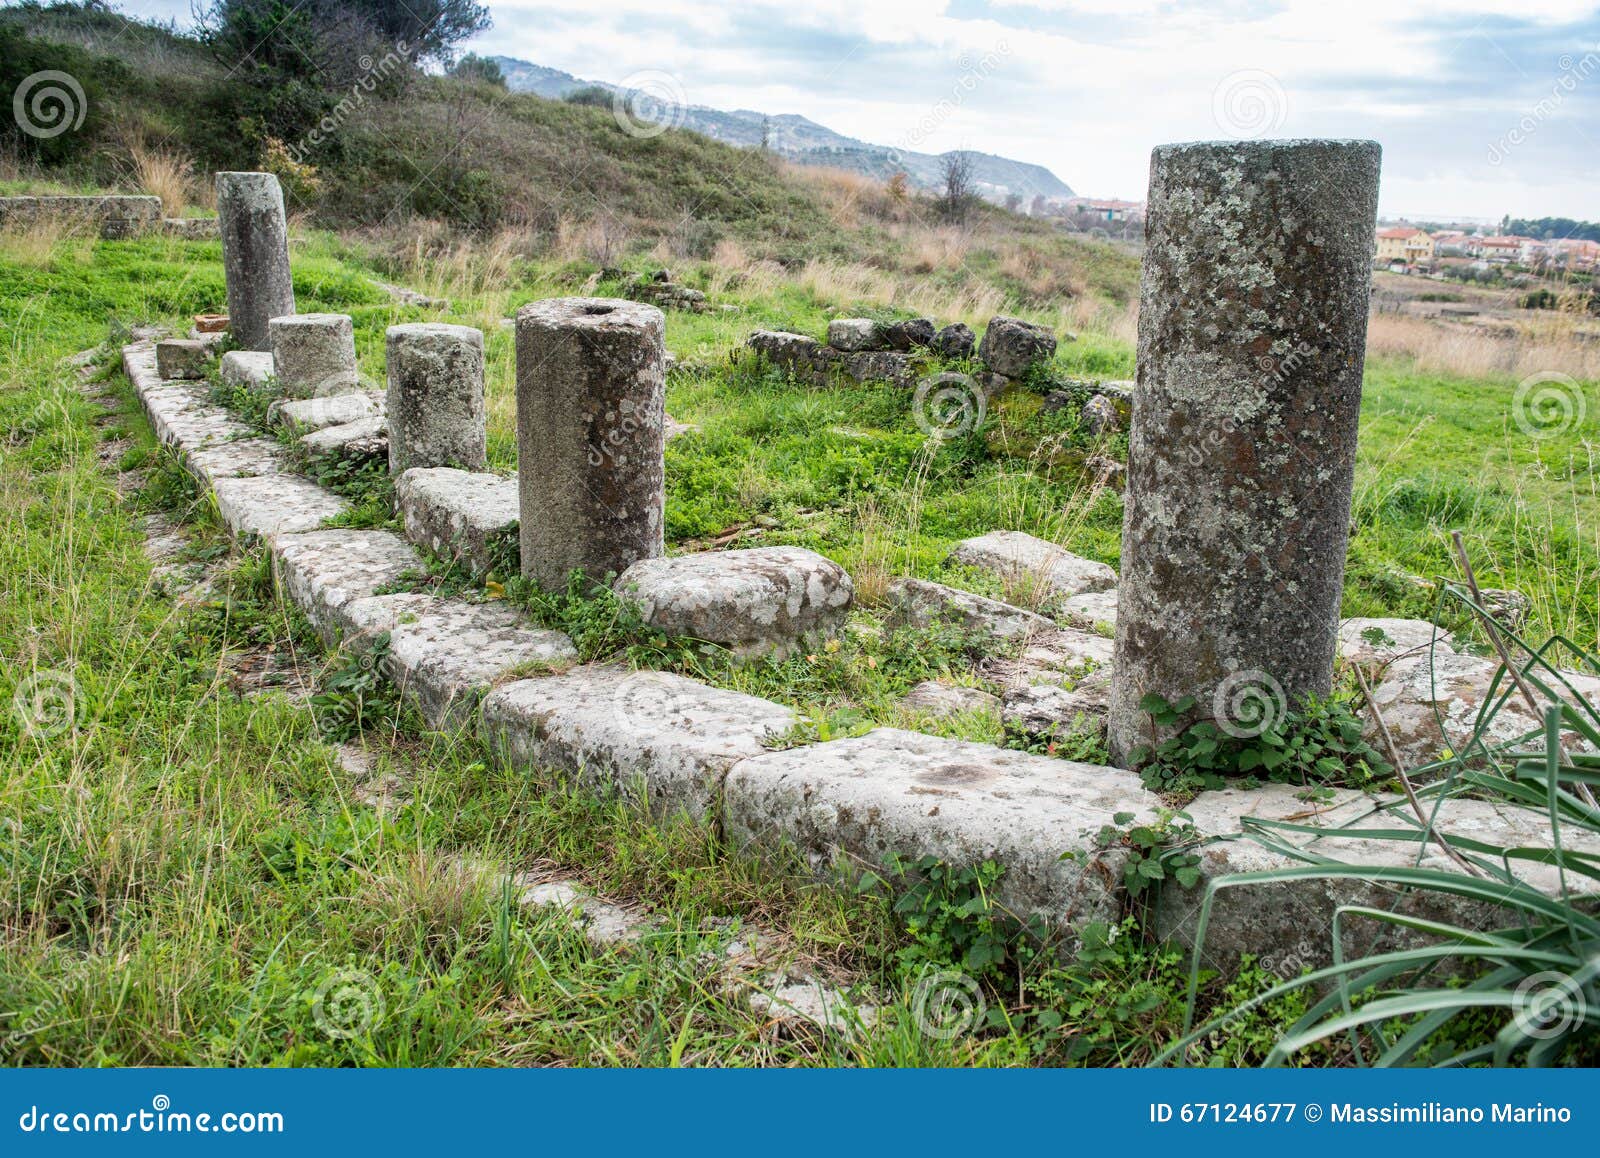 elea velia in roman times, is an ancient city of magna grecia